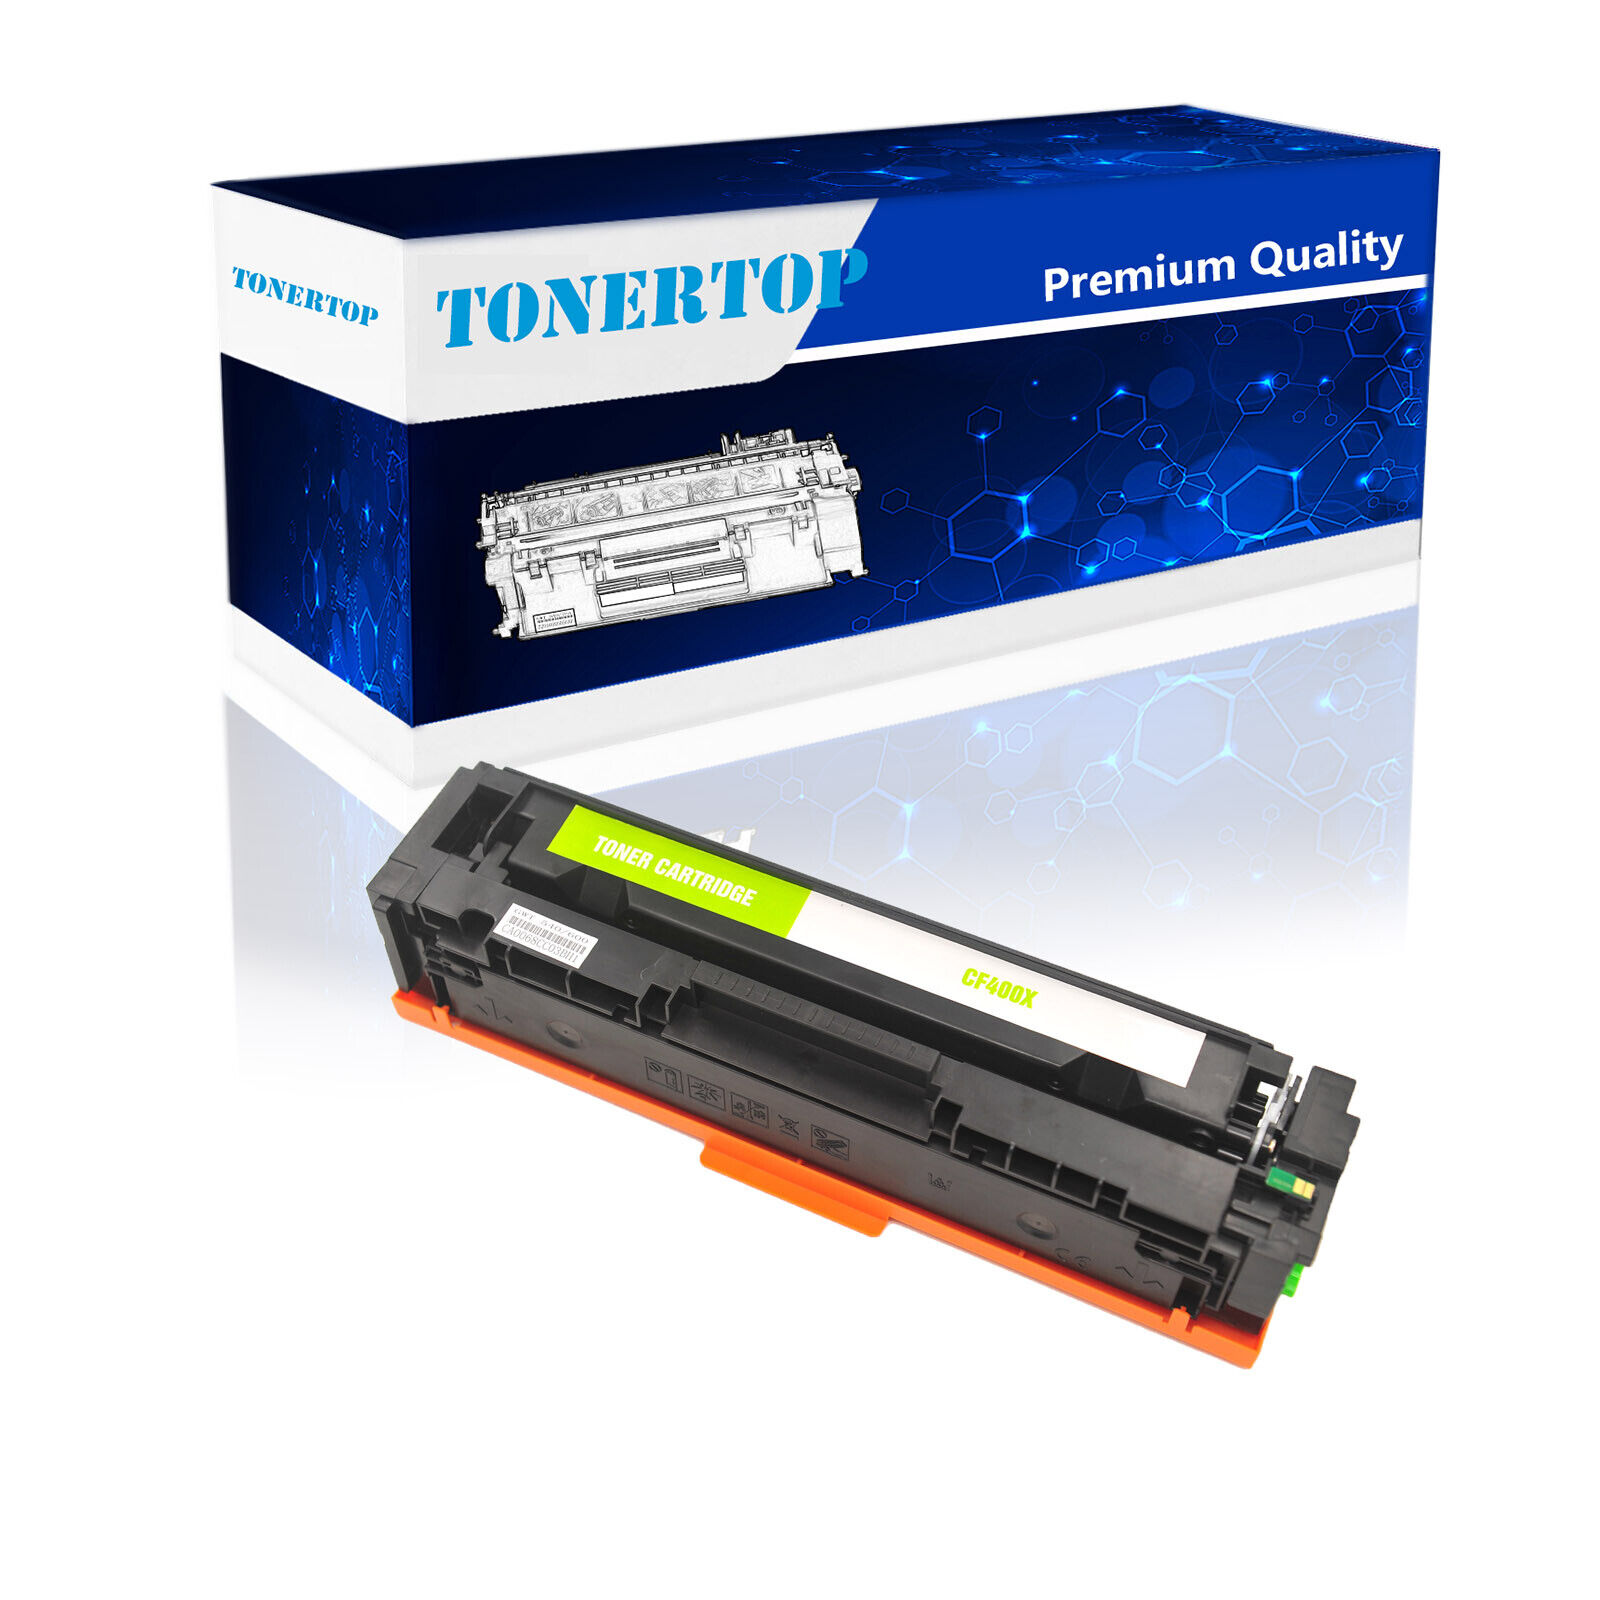 Toner Cartridge CF400X 401X 402X CF403X For HP 201X Color LaserJet M252n M252dw